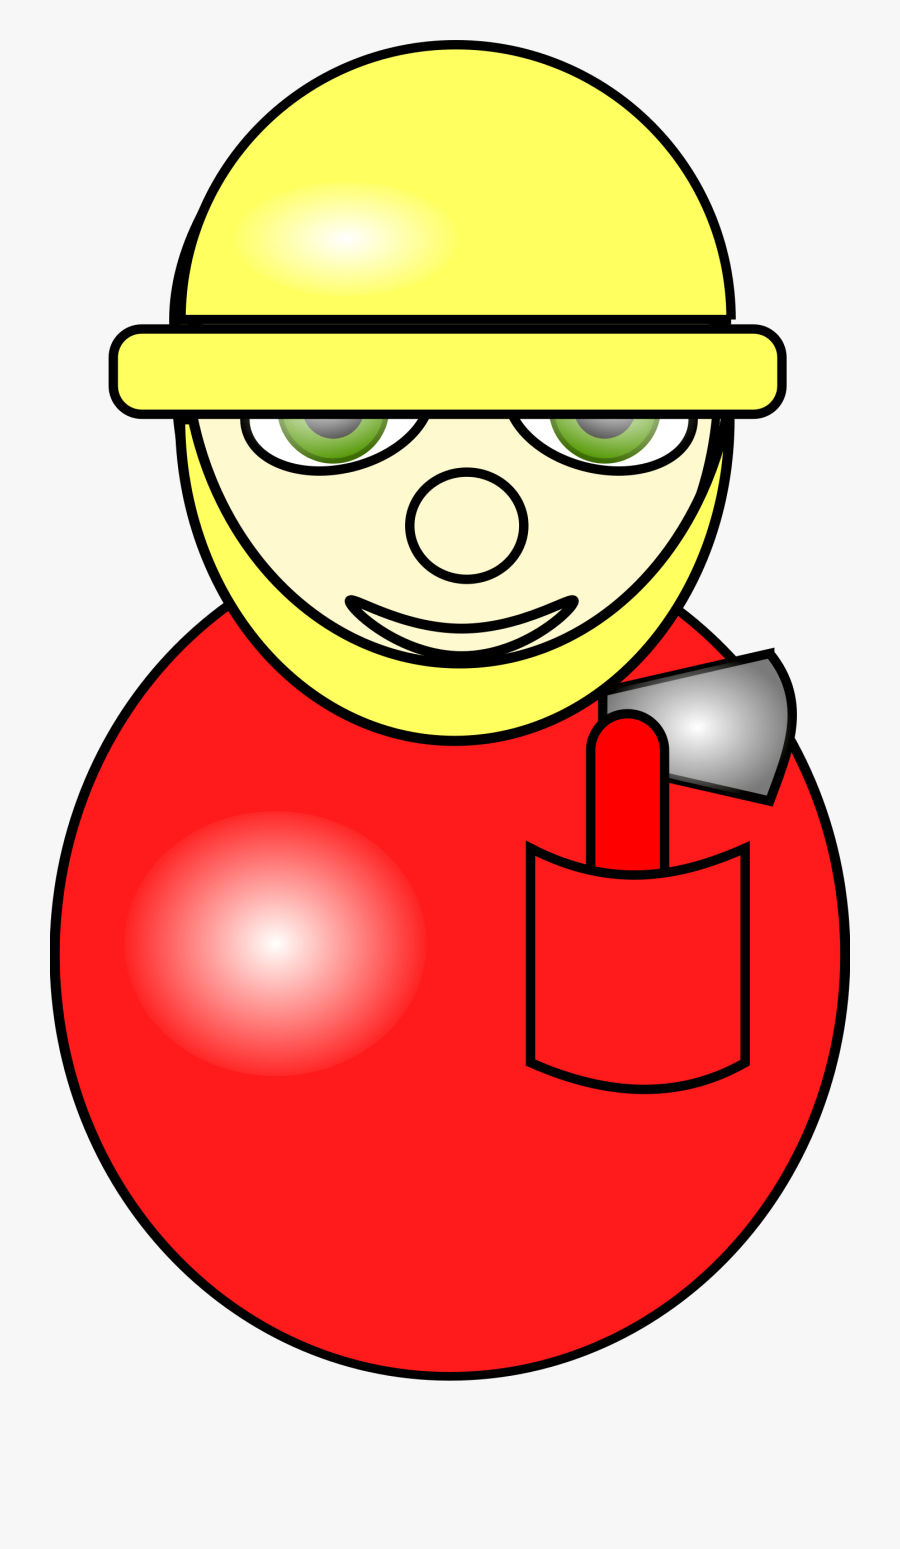 Fireman Avatar Helmet Axe Png Image - صور كارتون رجل الاطفاء, Transparent Clipart